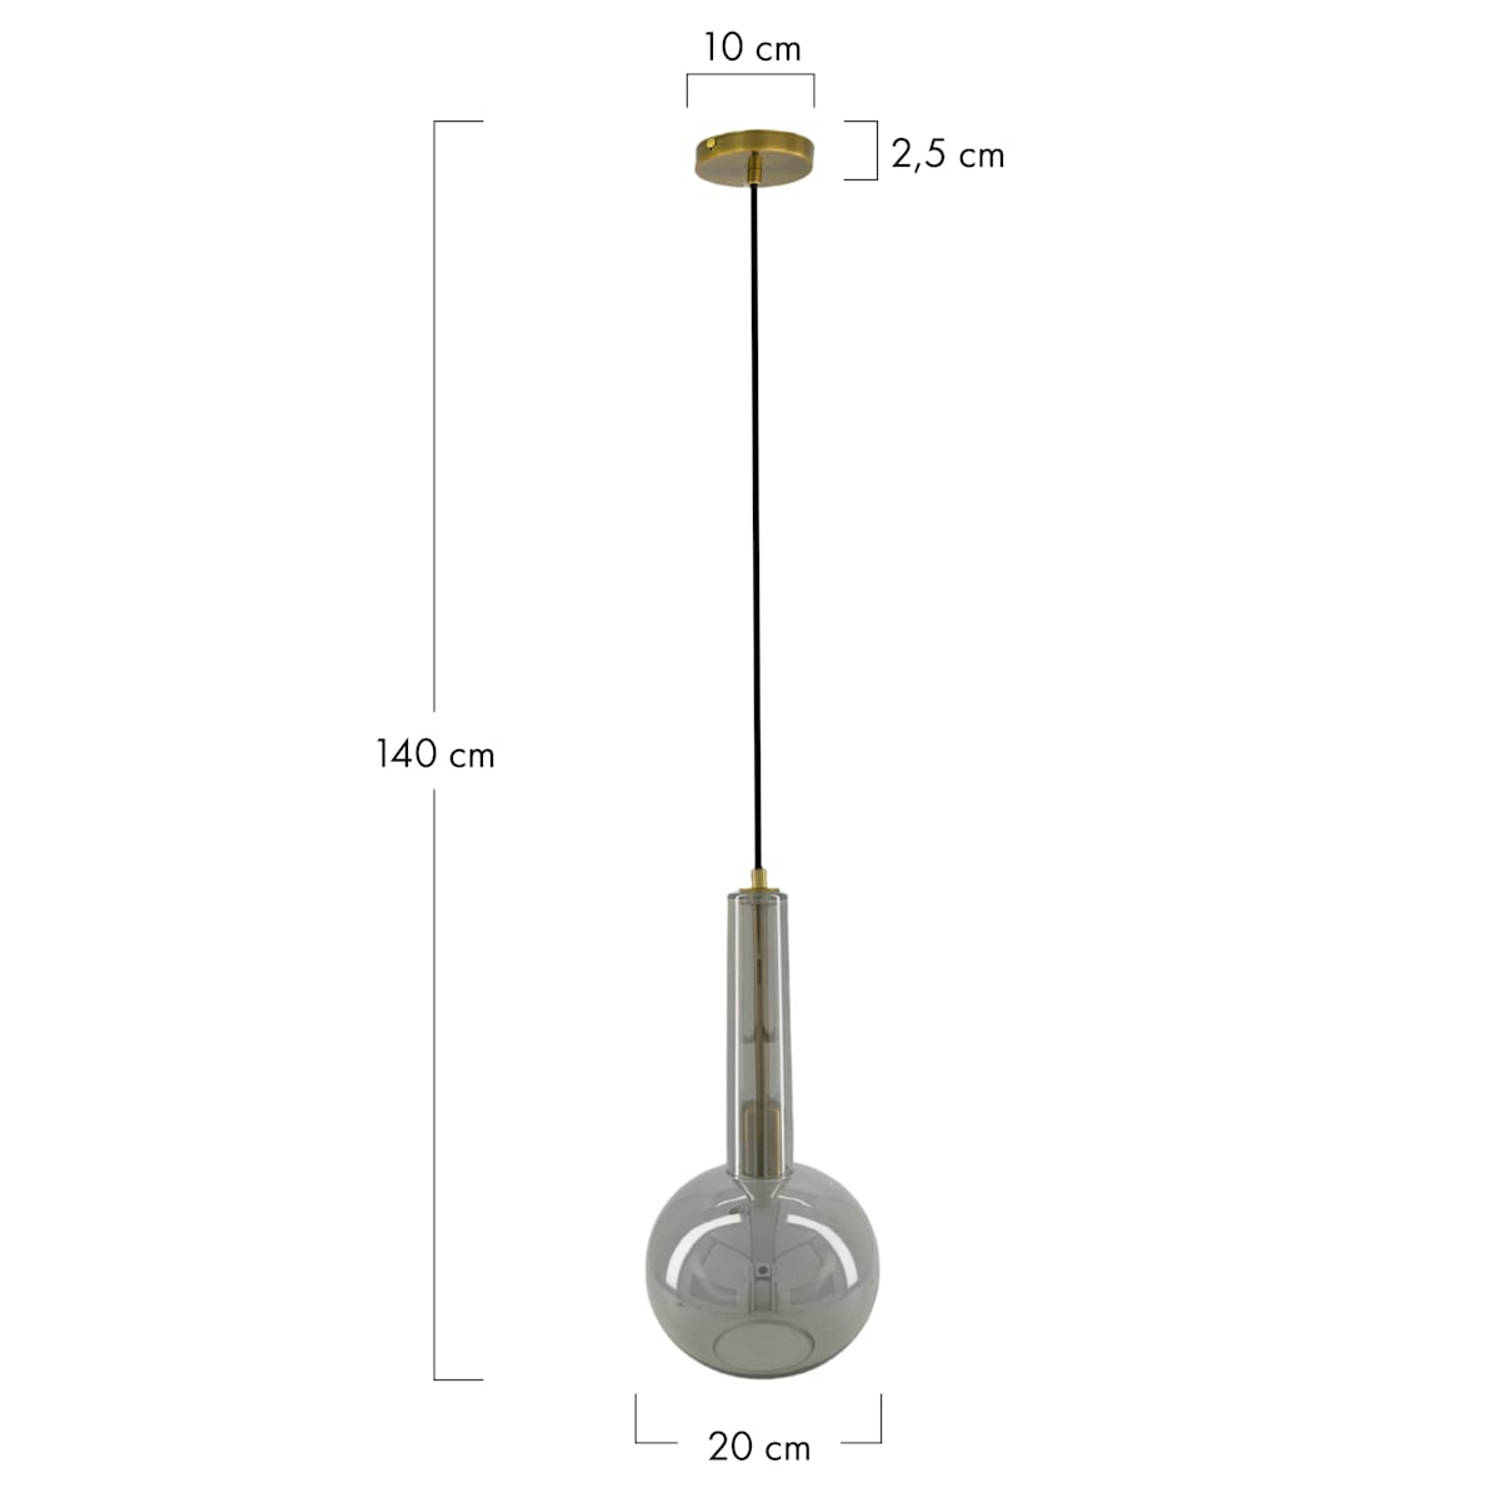 DKNC - Hanglamp glas - 20x20x40cm - Grijs